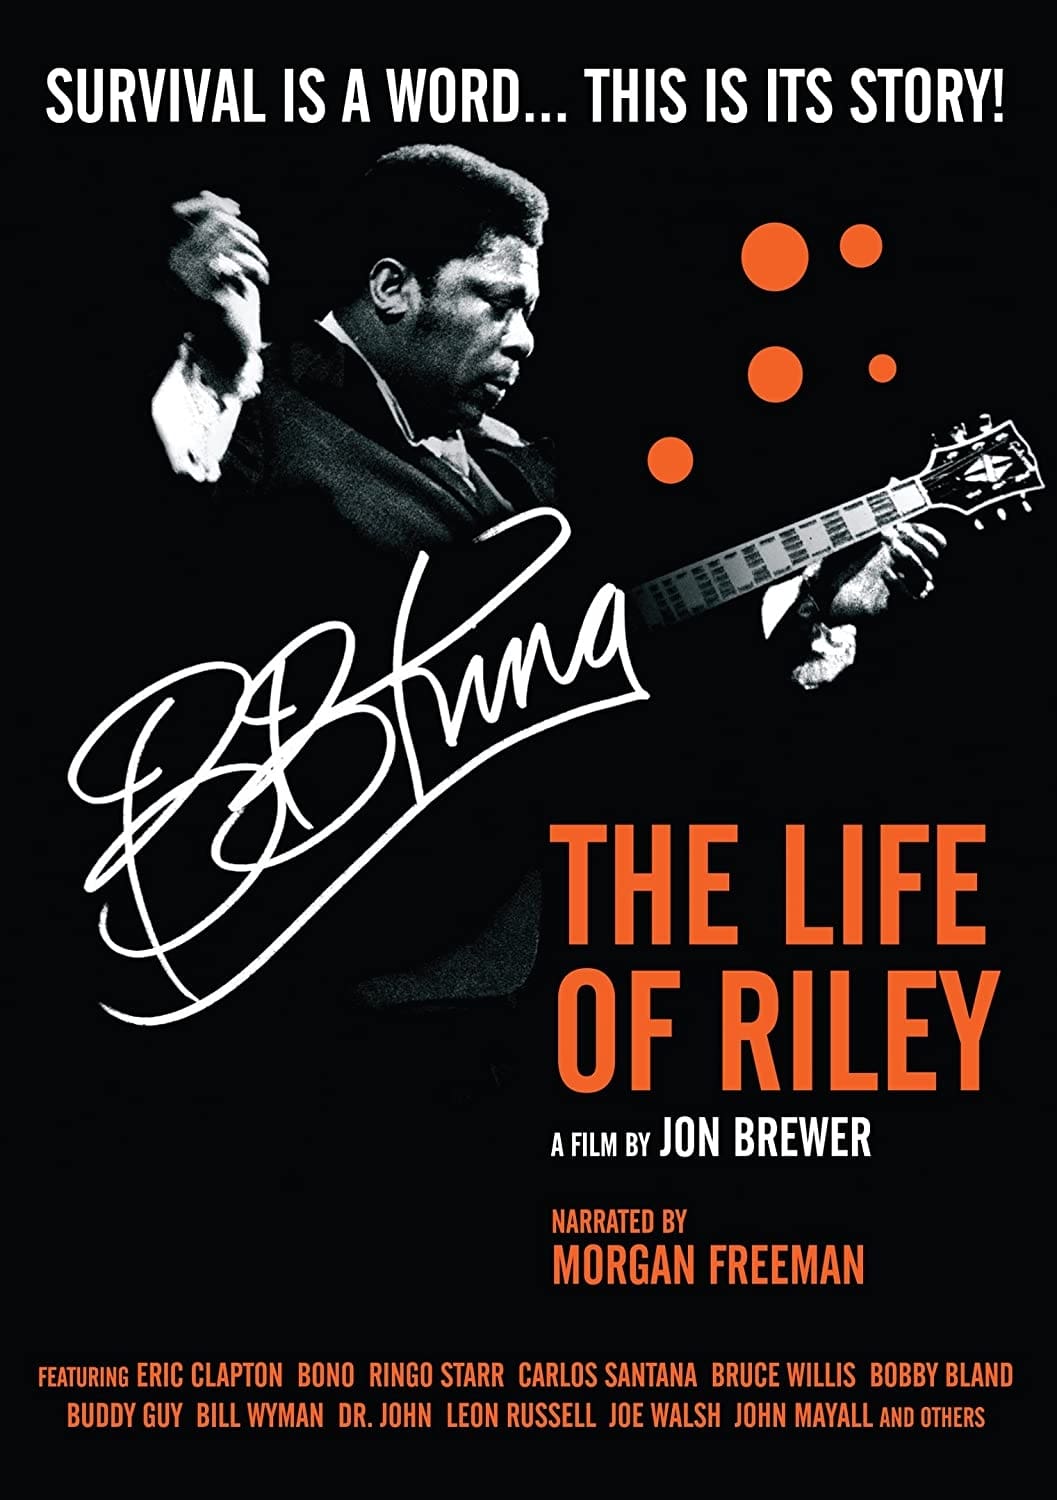 B.B. King, the Life of Riley